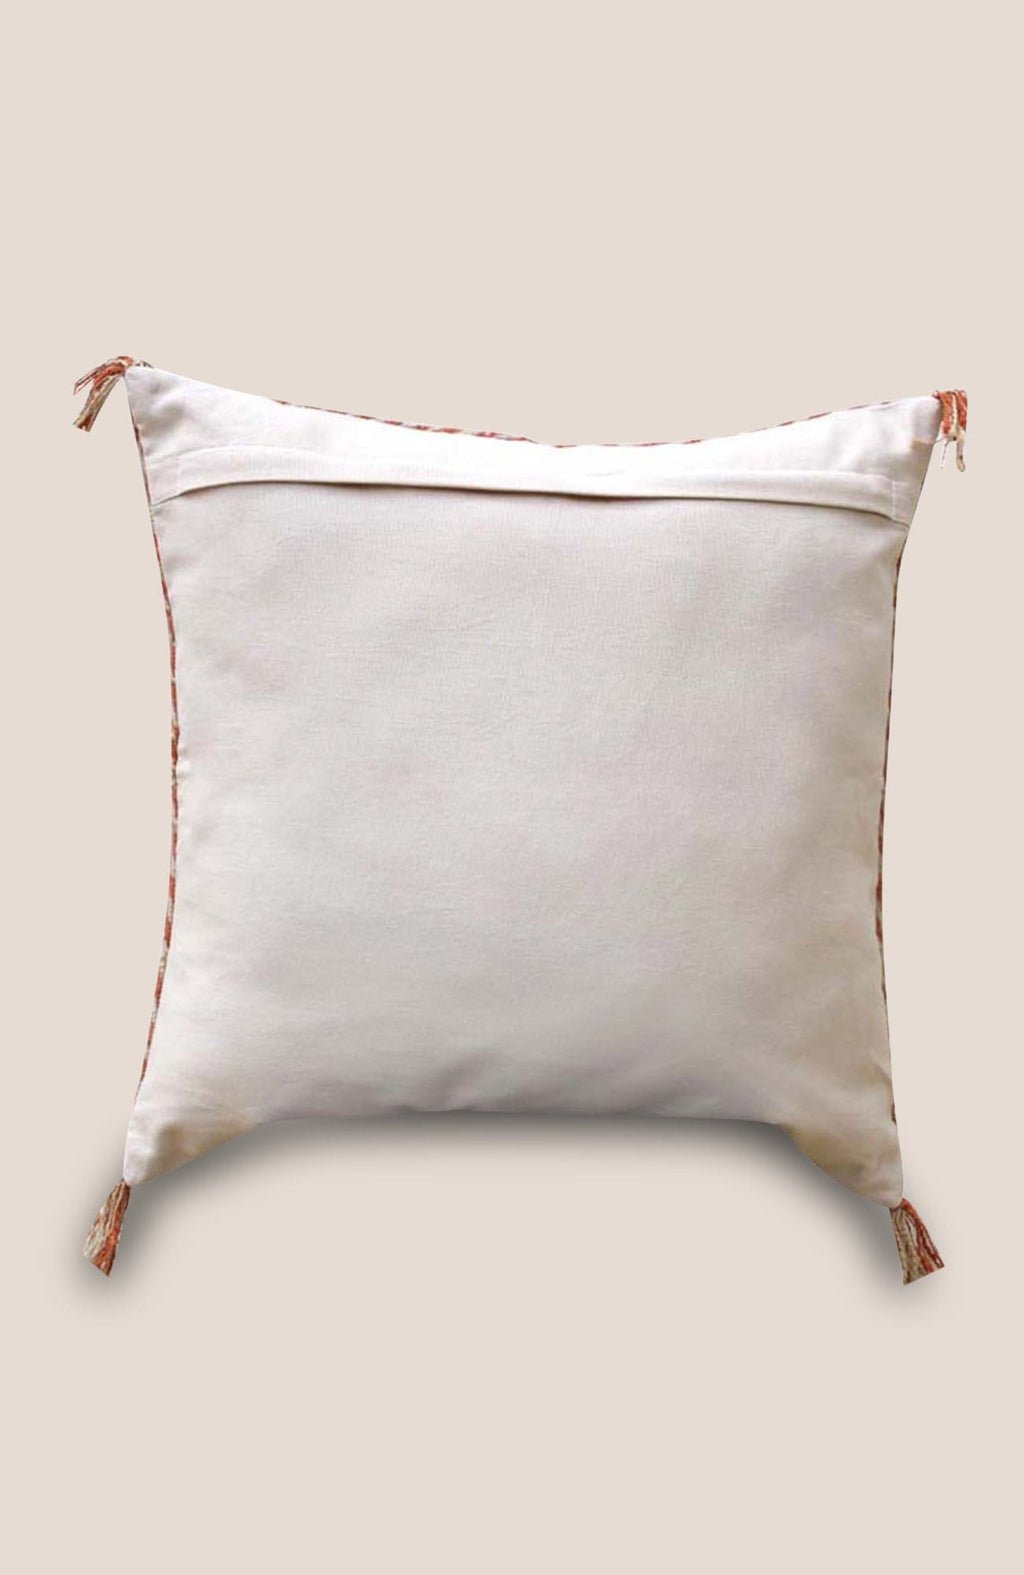 Sabra Pillow Cover Riona - Home Decor | Shop Baskets, Ceramics, Pillows, Rugs & Wall Hangs online